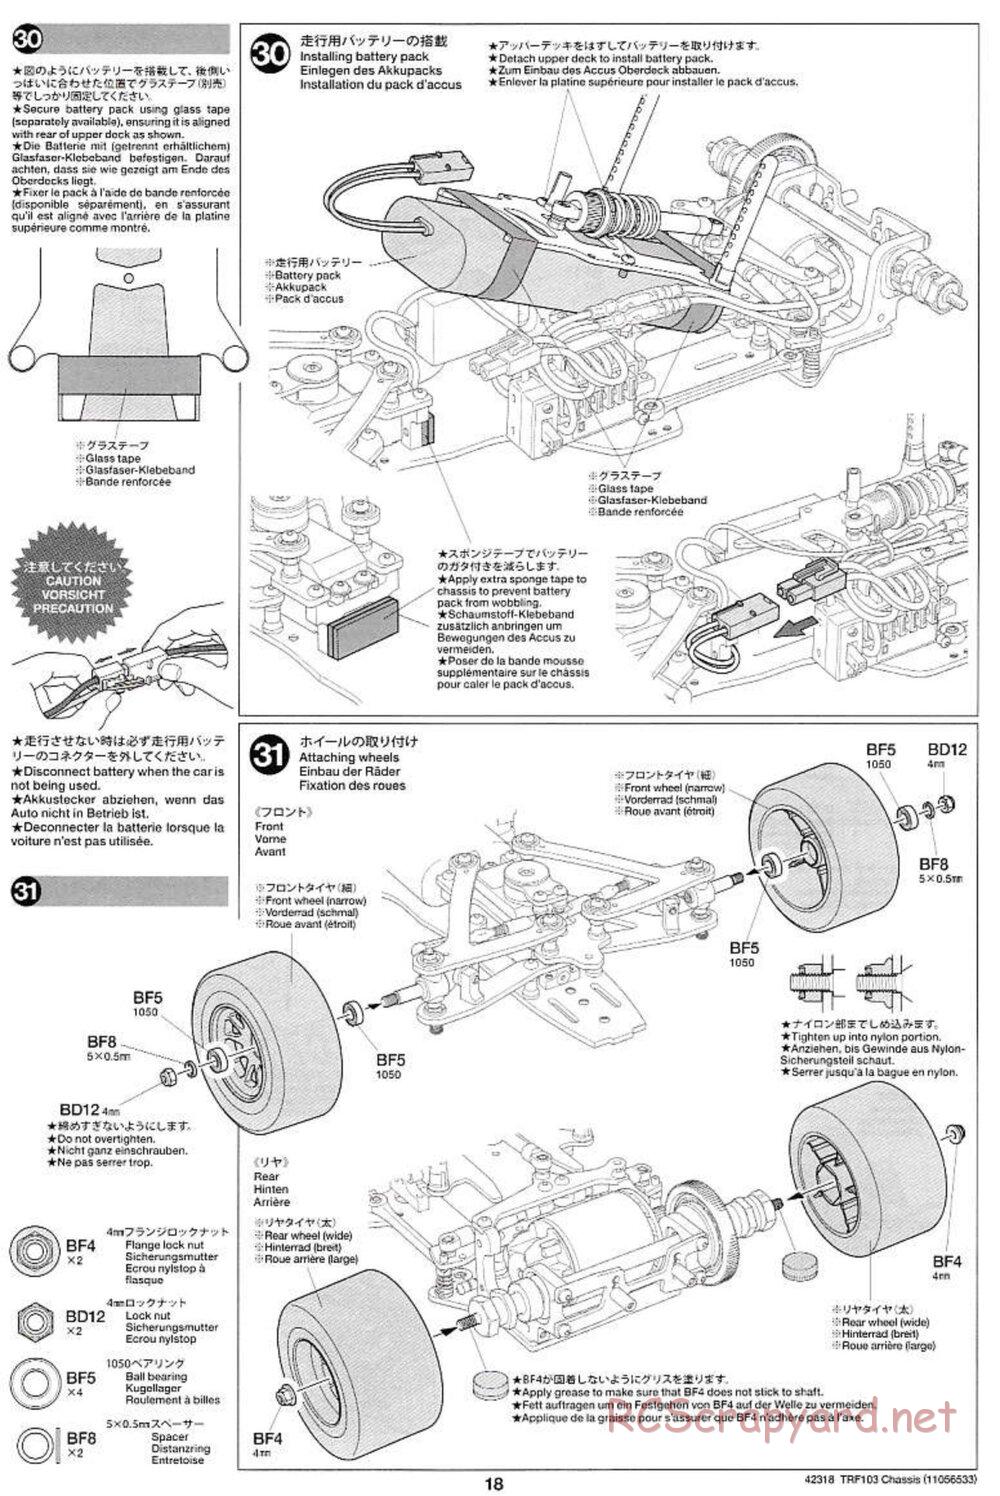 Tamiya - TRF103 Chassis - Manual - Page 18